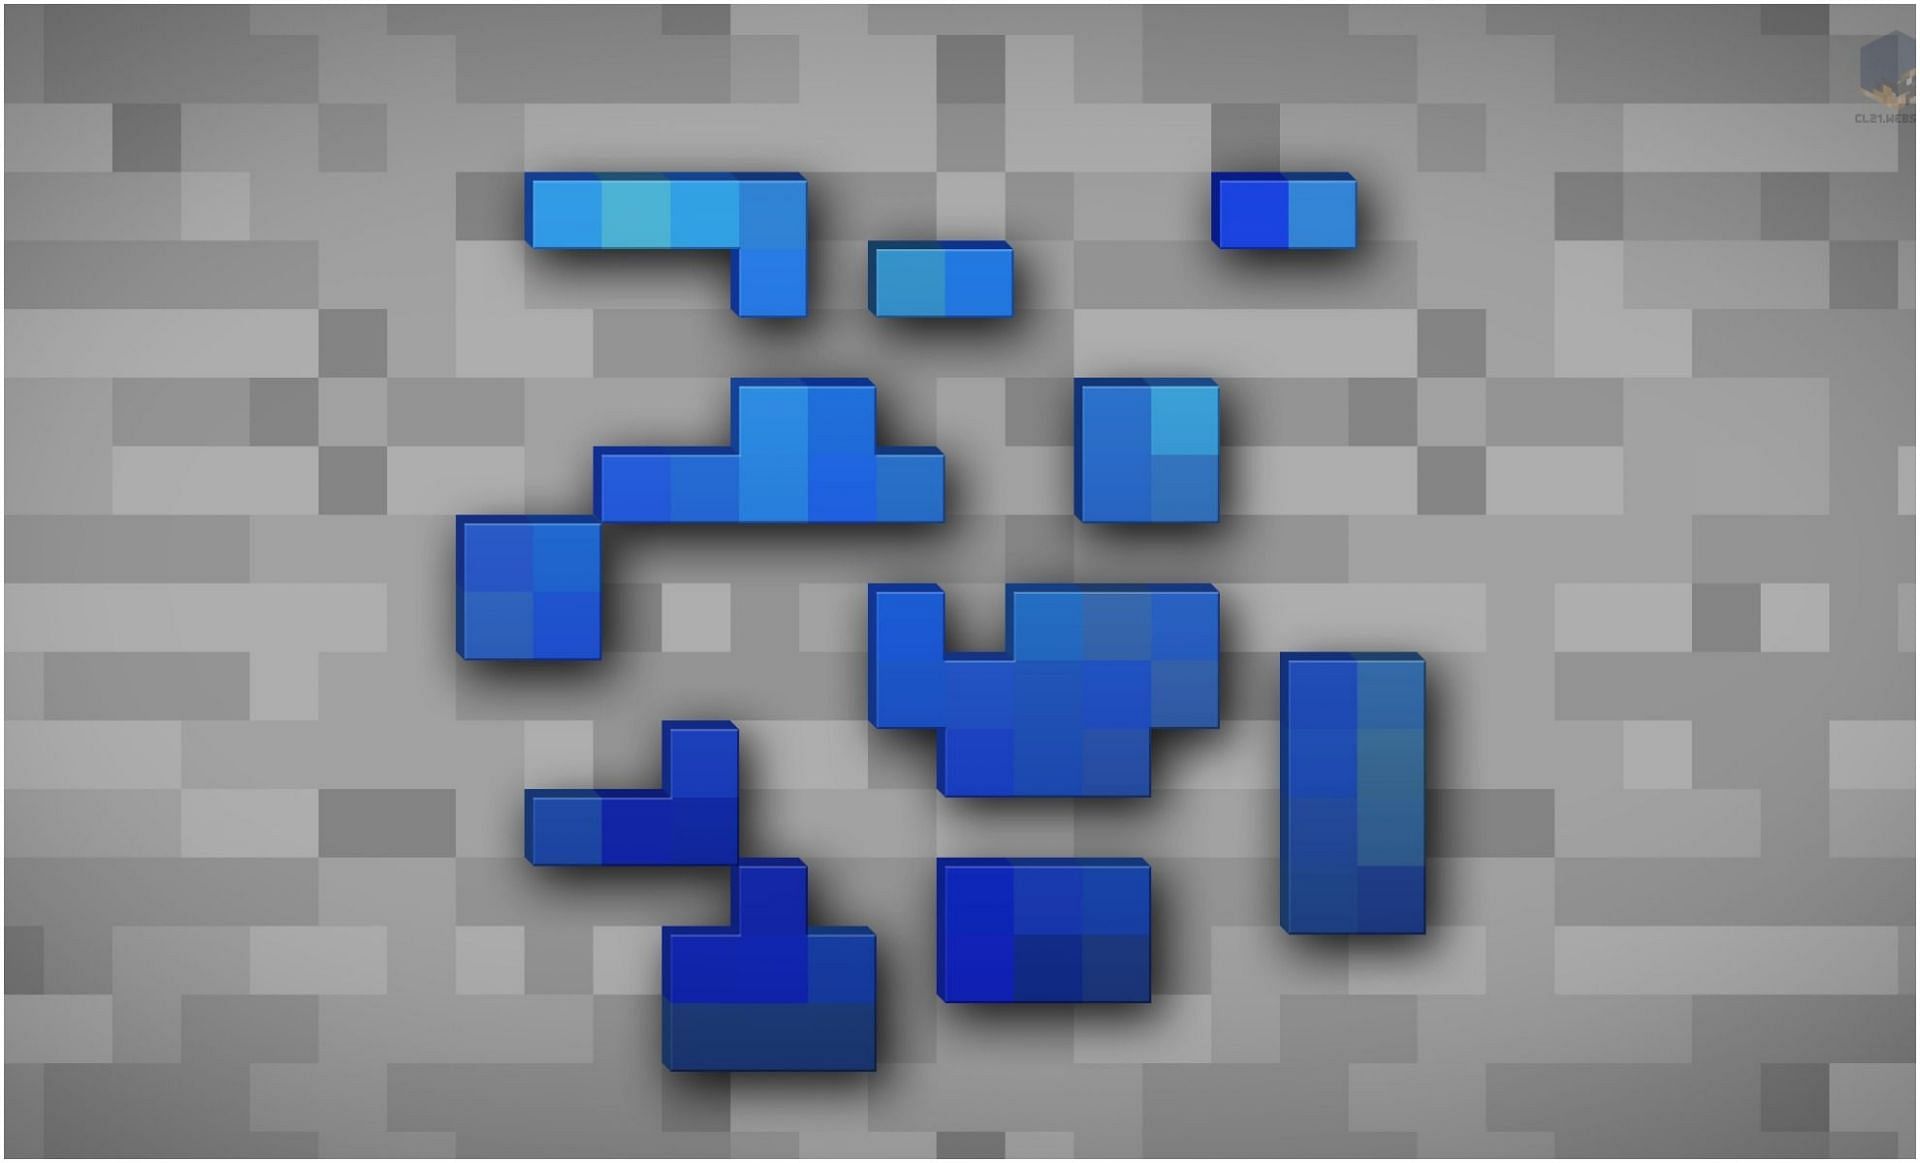 Lapis Lazuli ore in Minecraft (Image via WallpaperSafari/Minecraft)